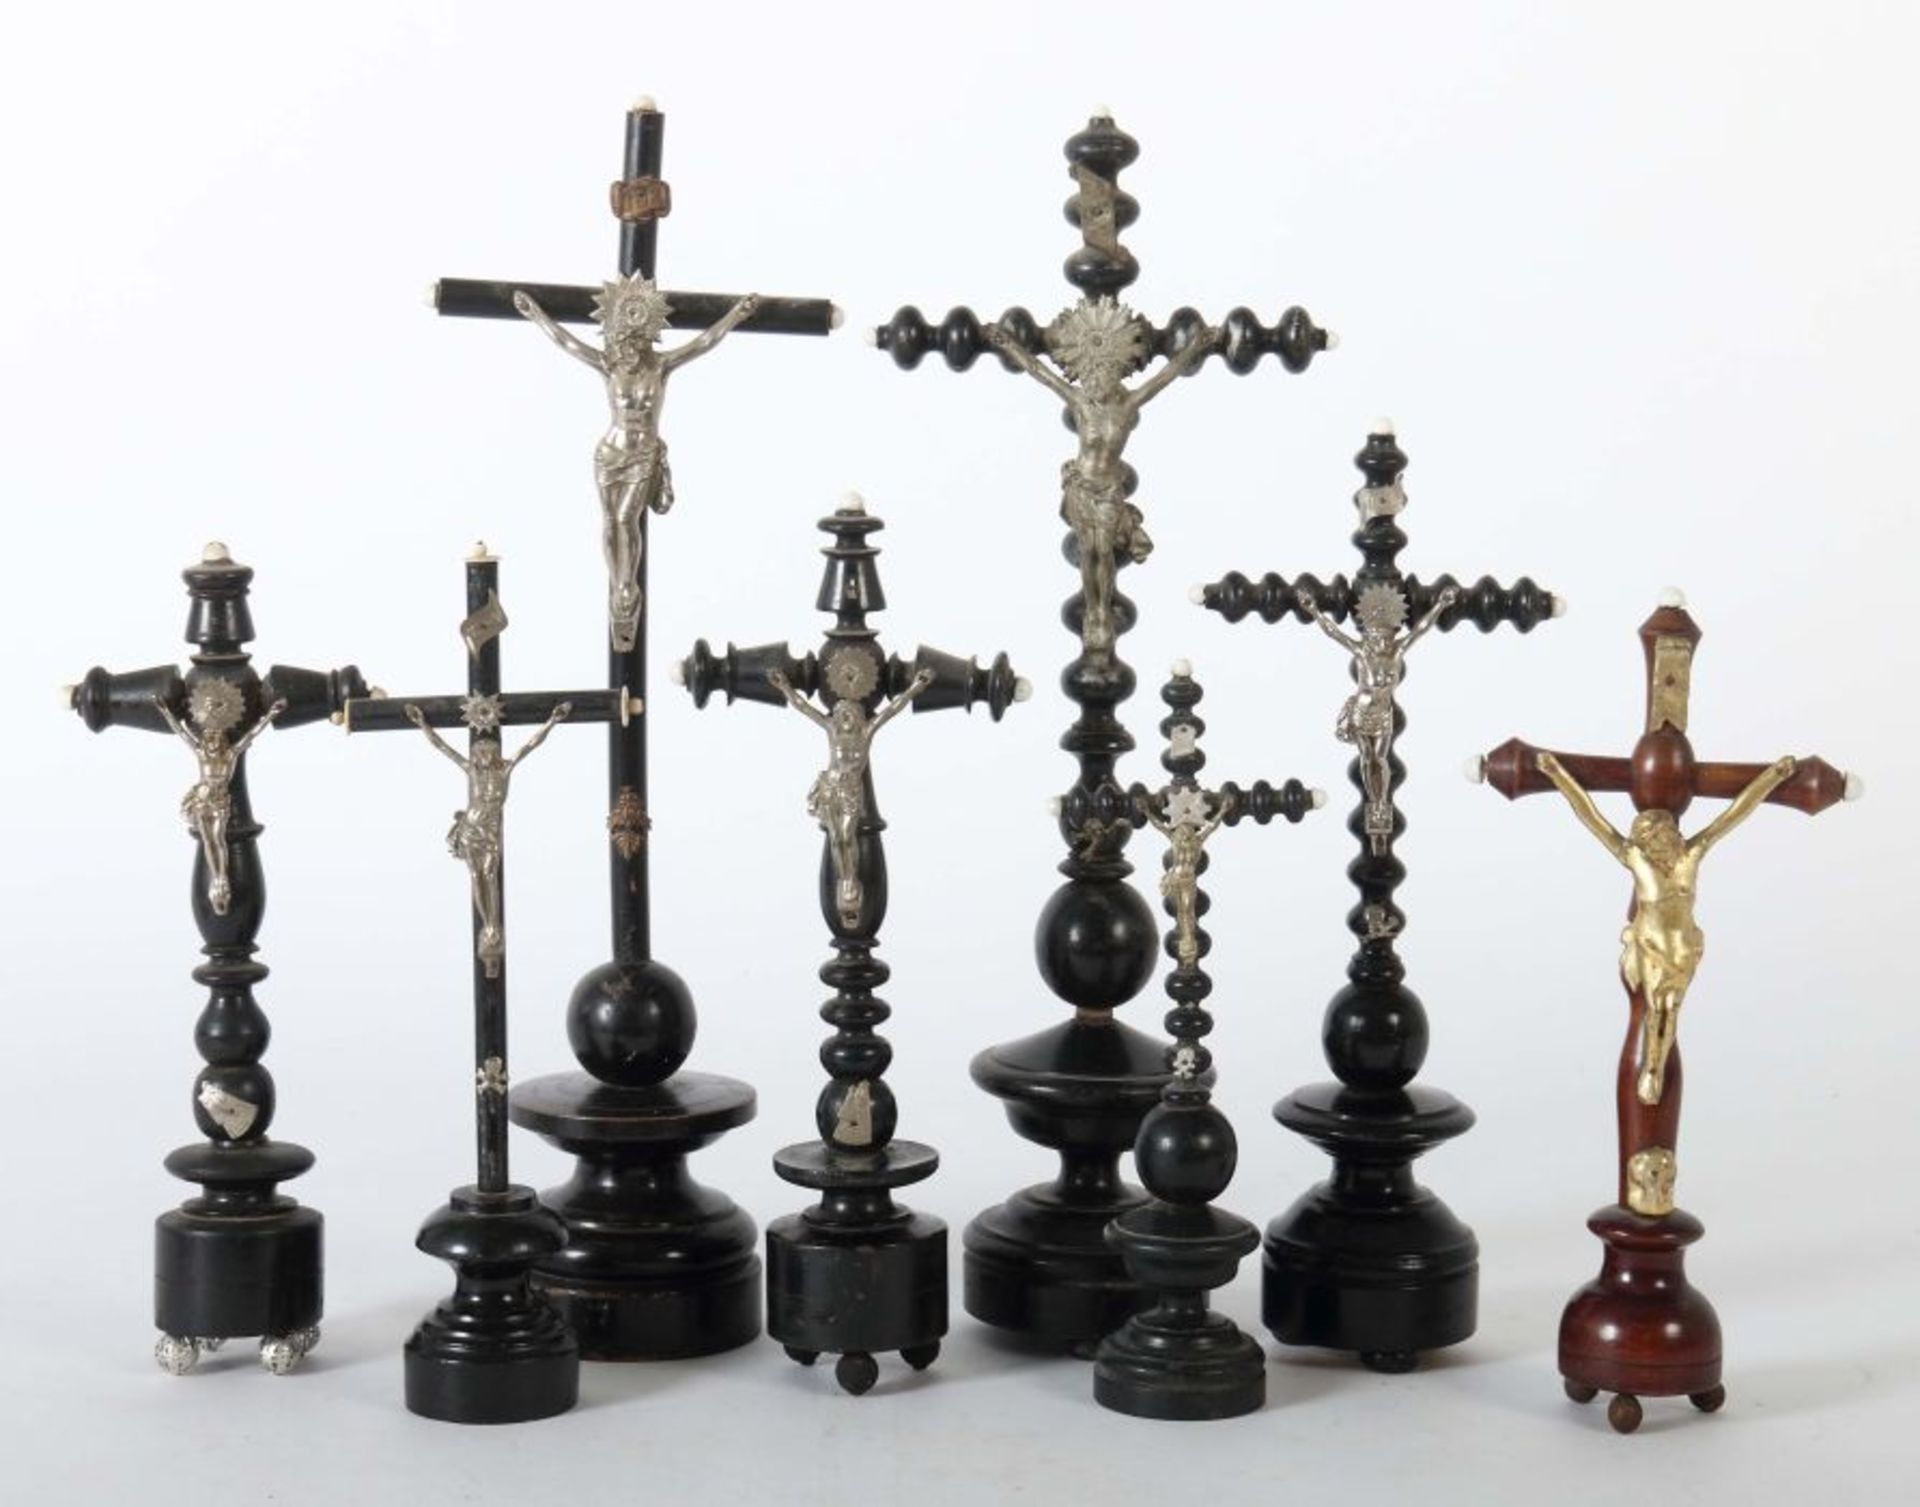 Konvolut Standkruzifixe Süddeutschland, 19./20. Jh., 8 varierende Kreuze aus gedrechseltem Holz,